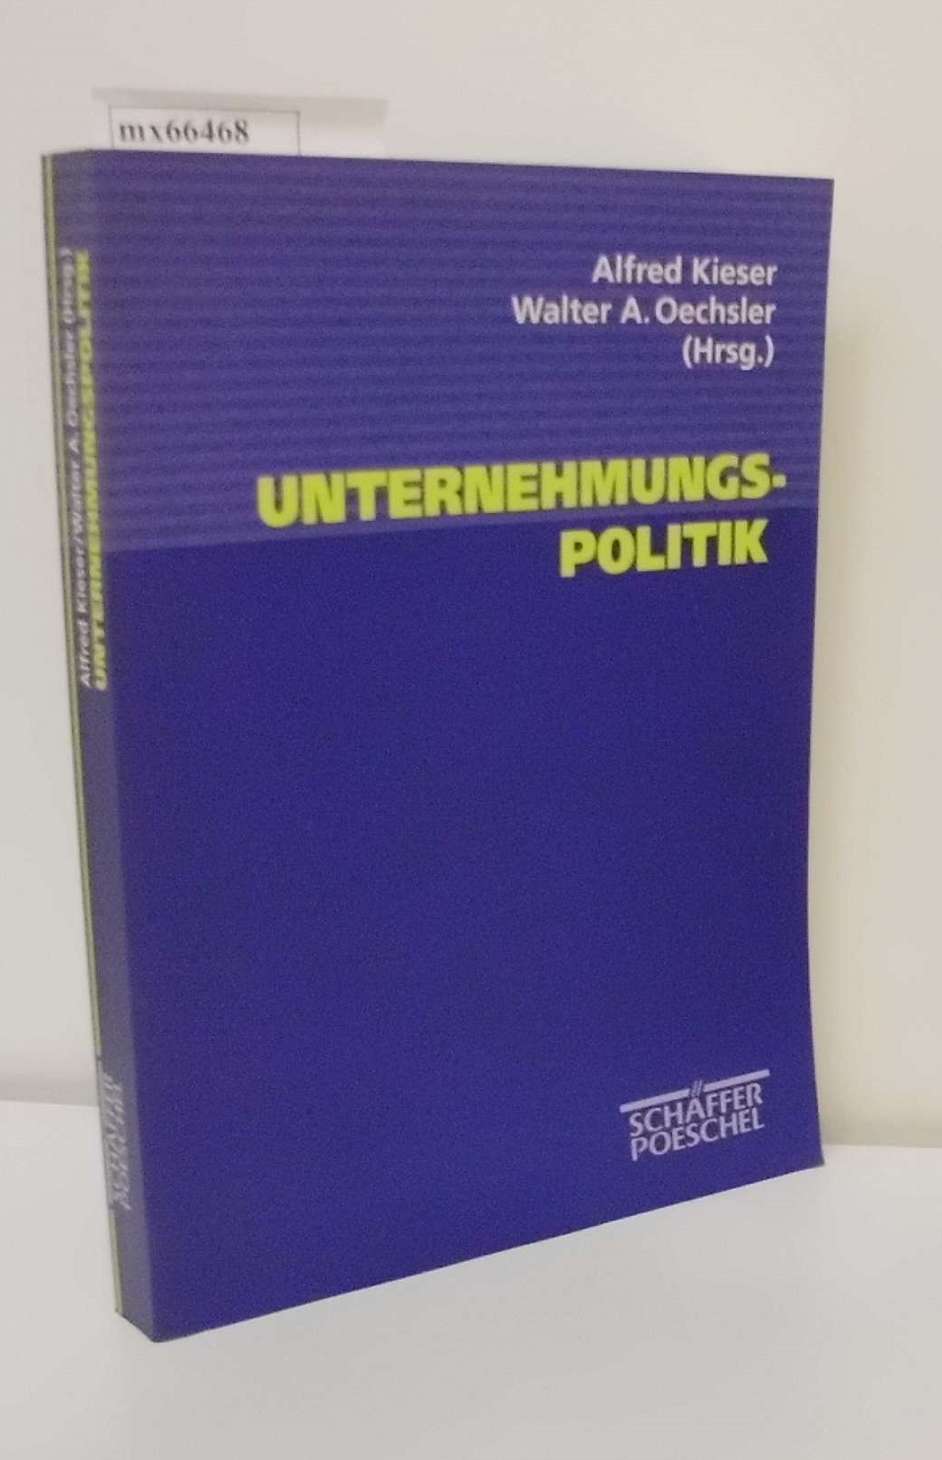 Unternehmungspolitik Alfred Kieser/Walter A. Oechsler - Kieser, Alfred [Hrsg.]